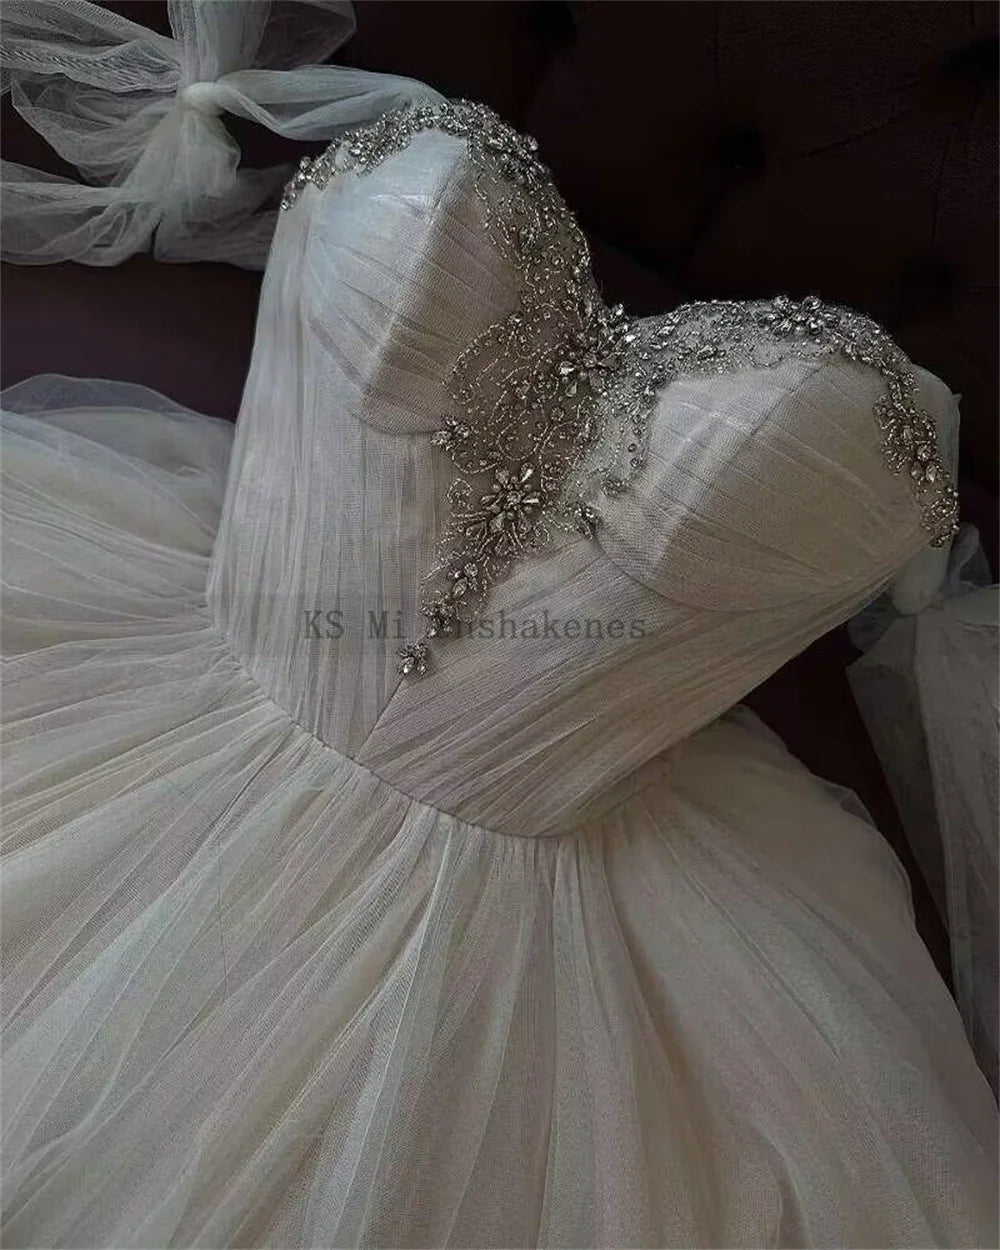 Chic Crystal Wedding Dress off Shoulder Beads Vintage Wedding Gowns Luxury Boho Bride Dresses Floor Length Corset Back